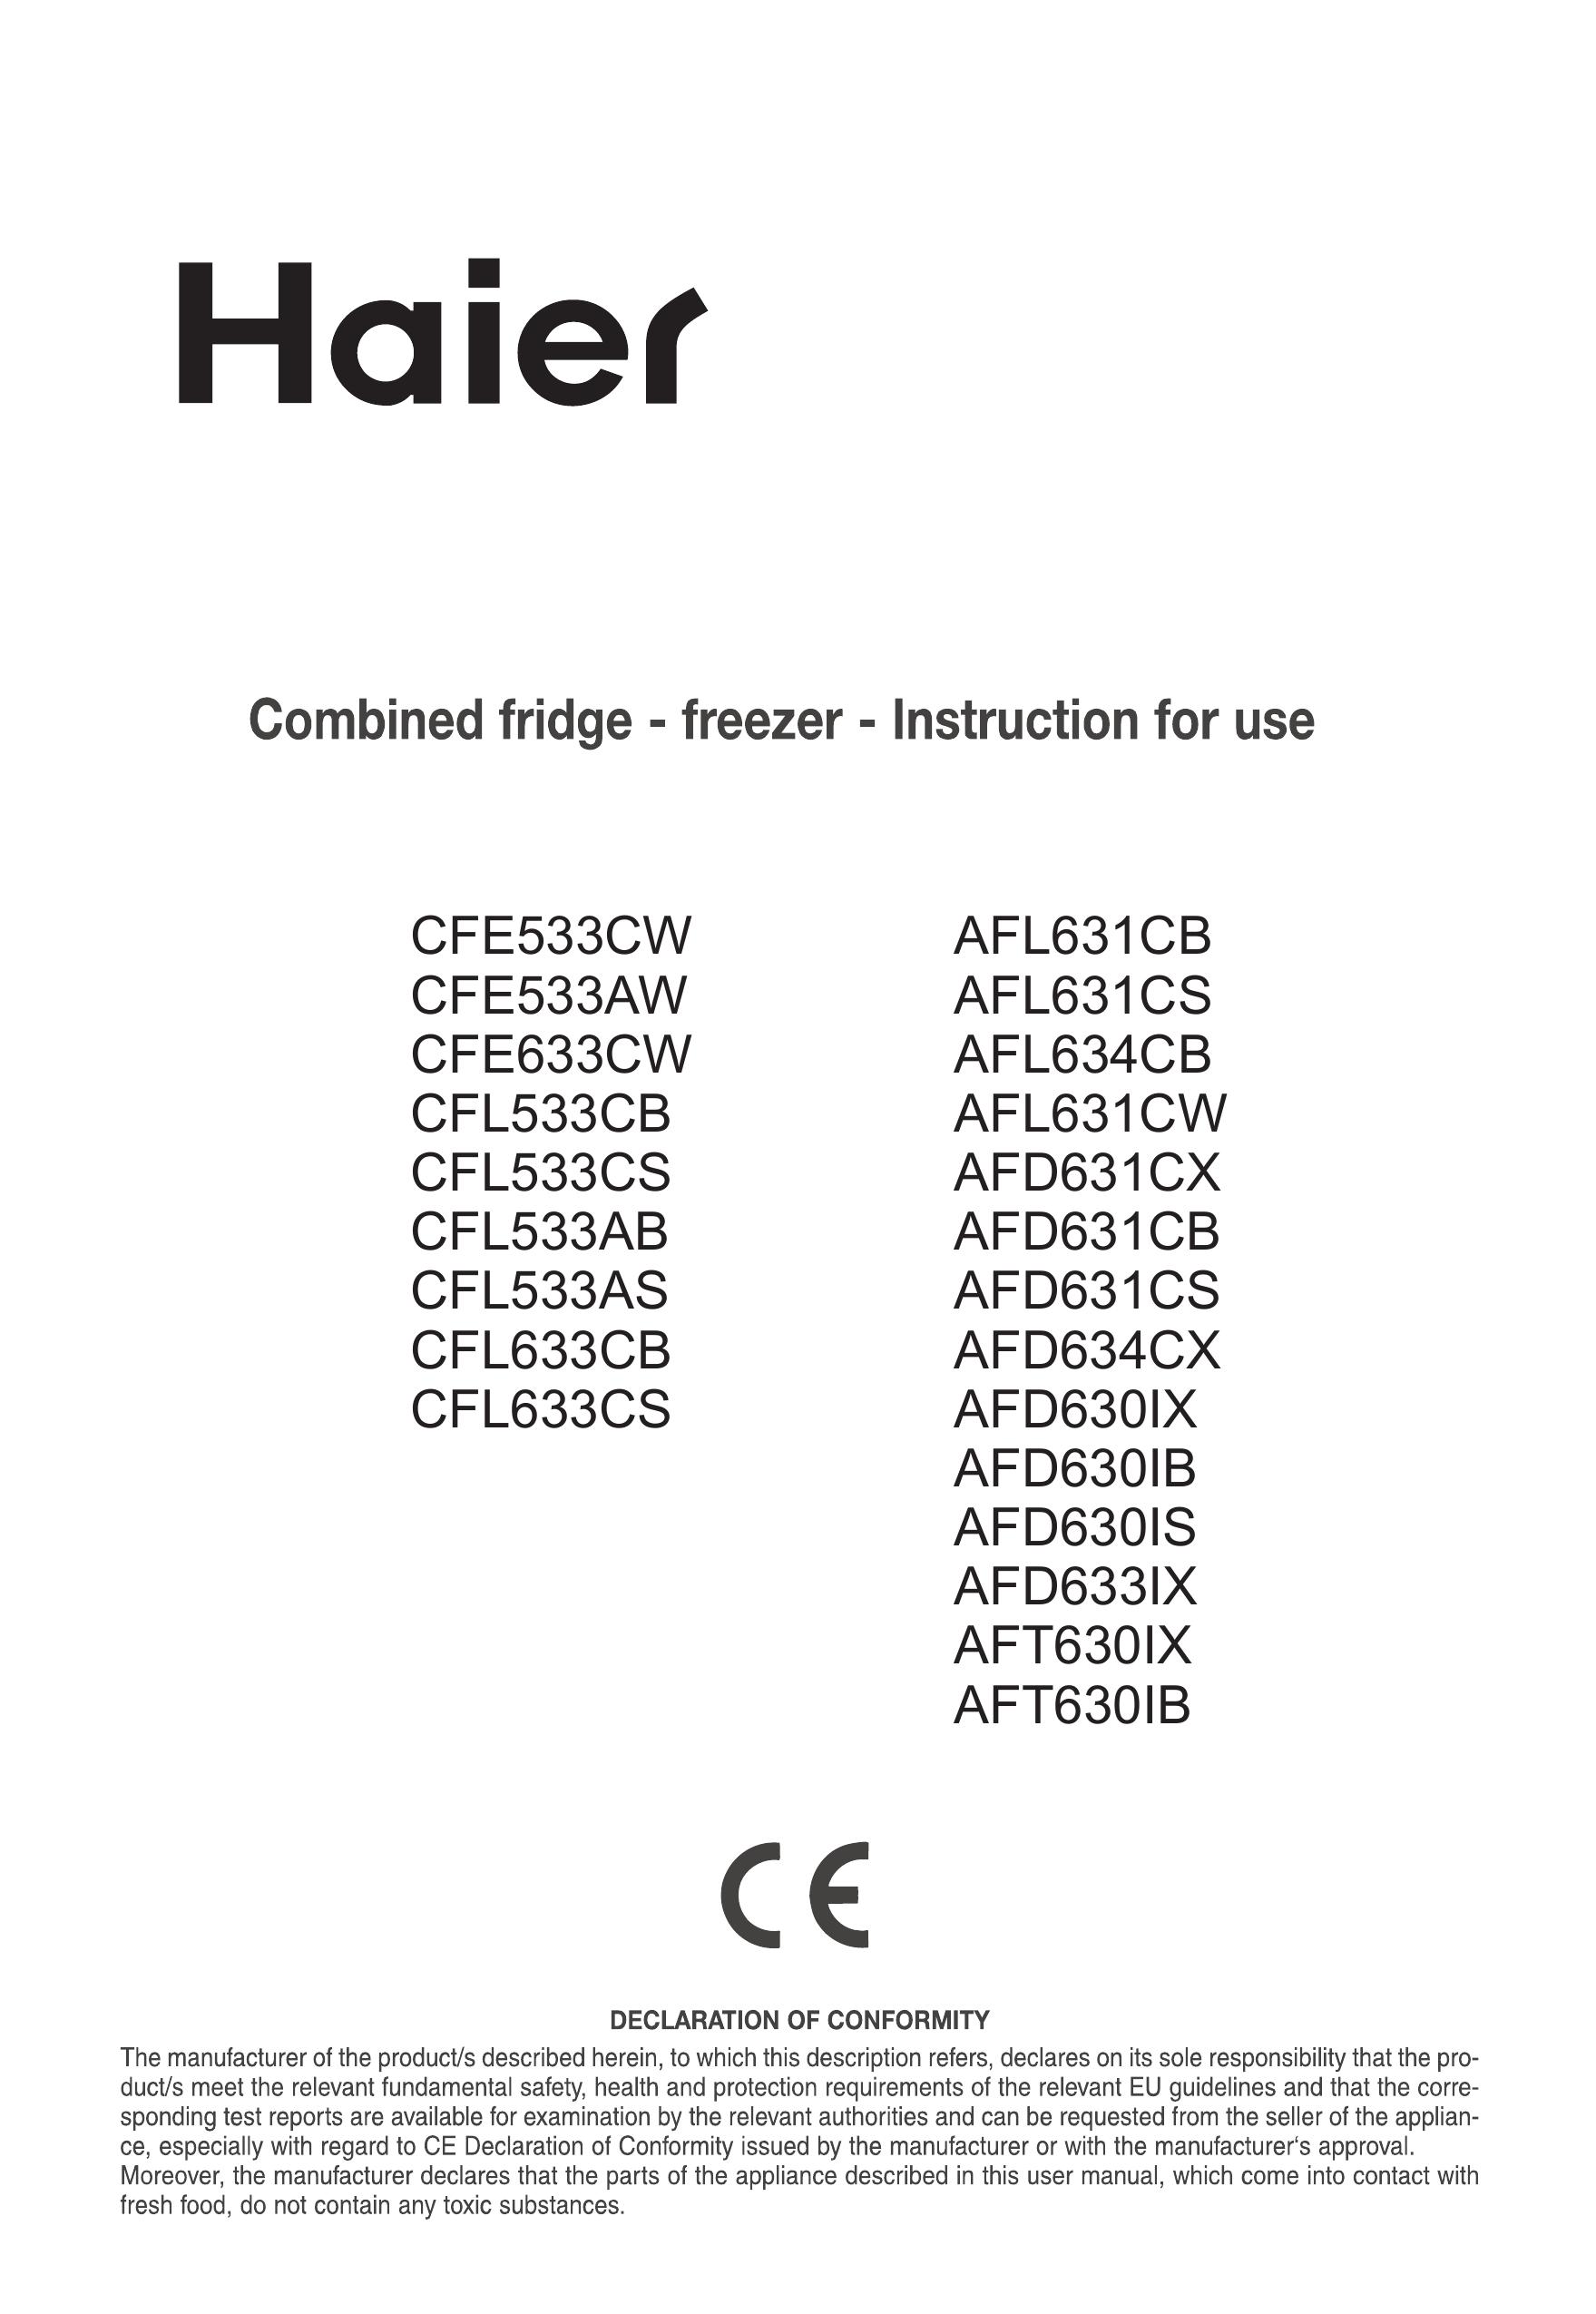 Haier AFD630IX Refrigerator User Manual